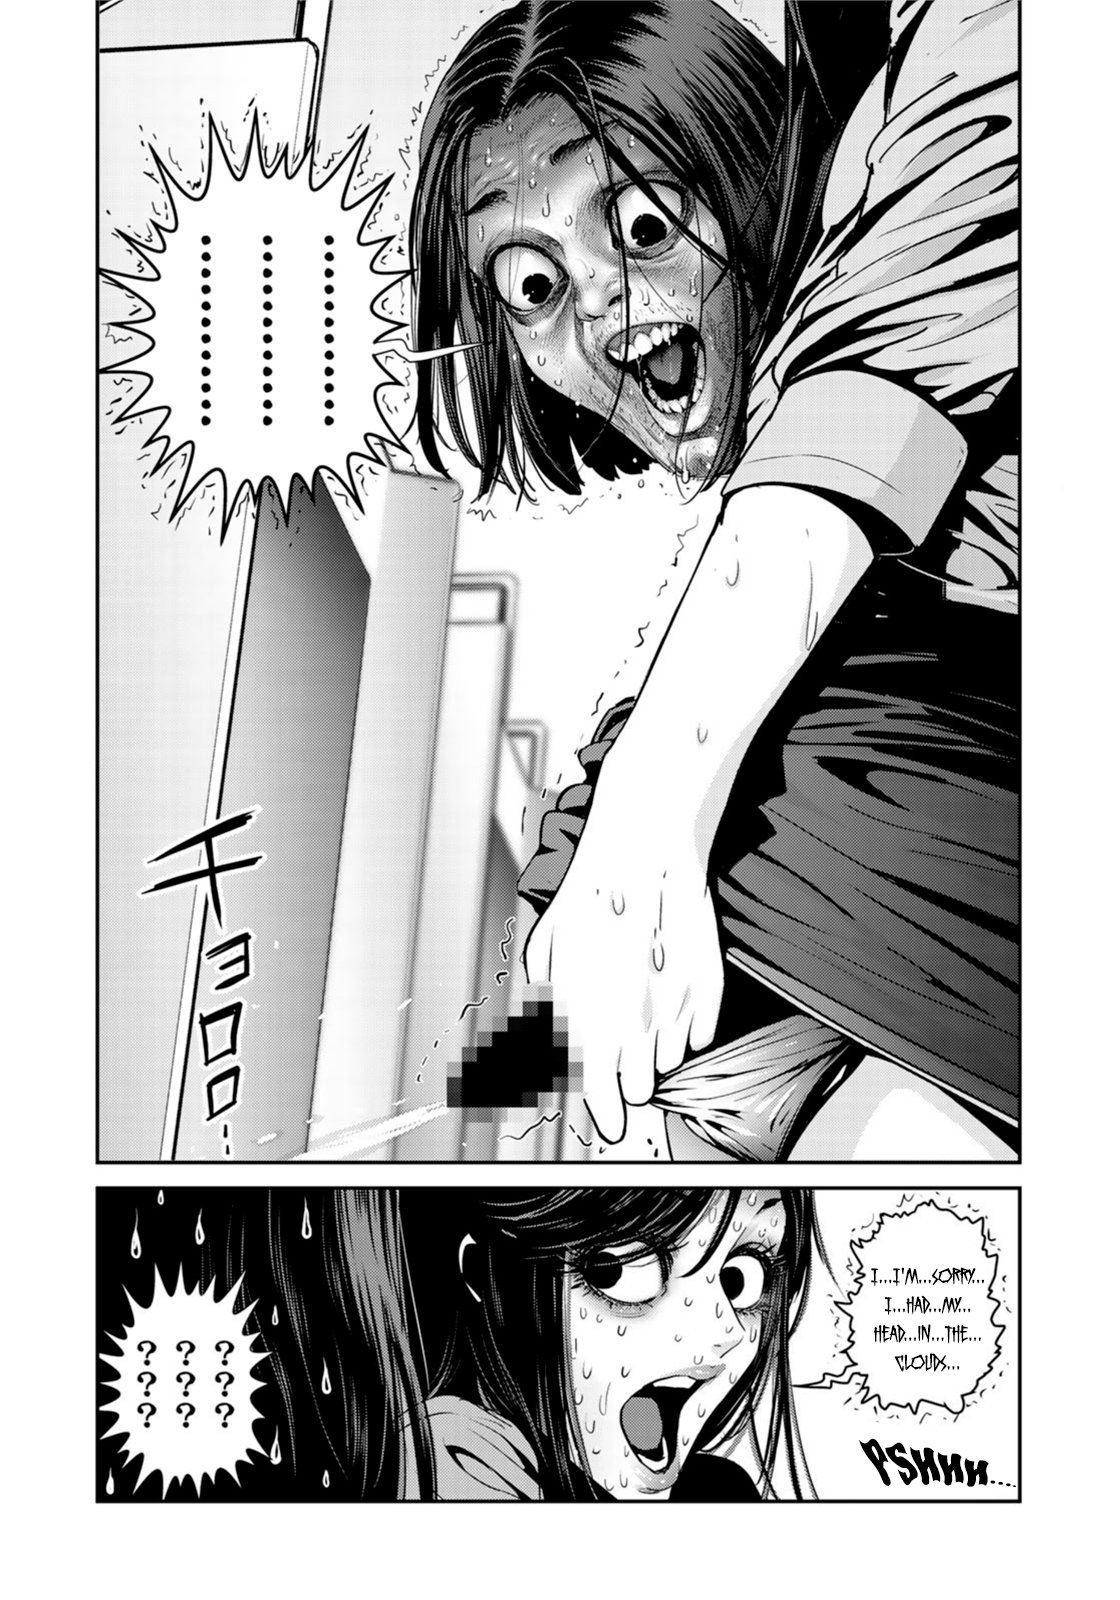 Lit Manga Anime Daily With Source Source Raw Hero By Hiramoto Akira Scanlanated By Alonescan On Mangadex Get The Manga T Co Gx8xrcikll Read Online T Co Mpmqosk9tb Seinen Ecchi Smut Action Comedy